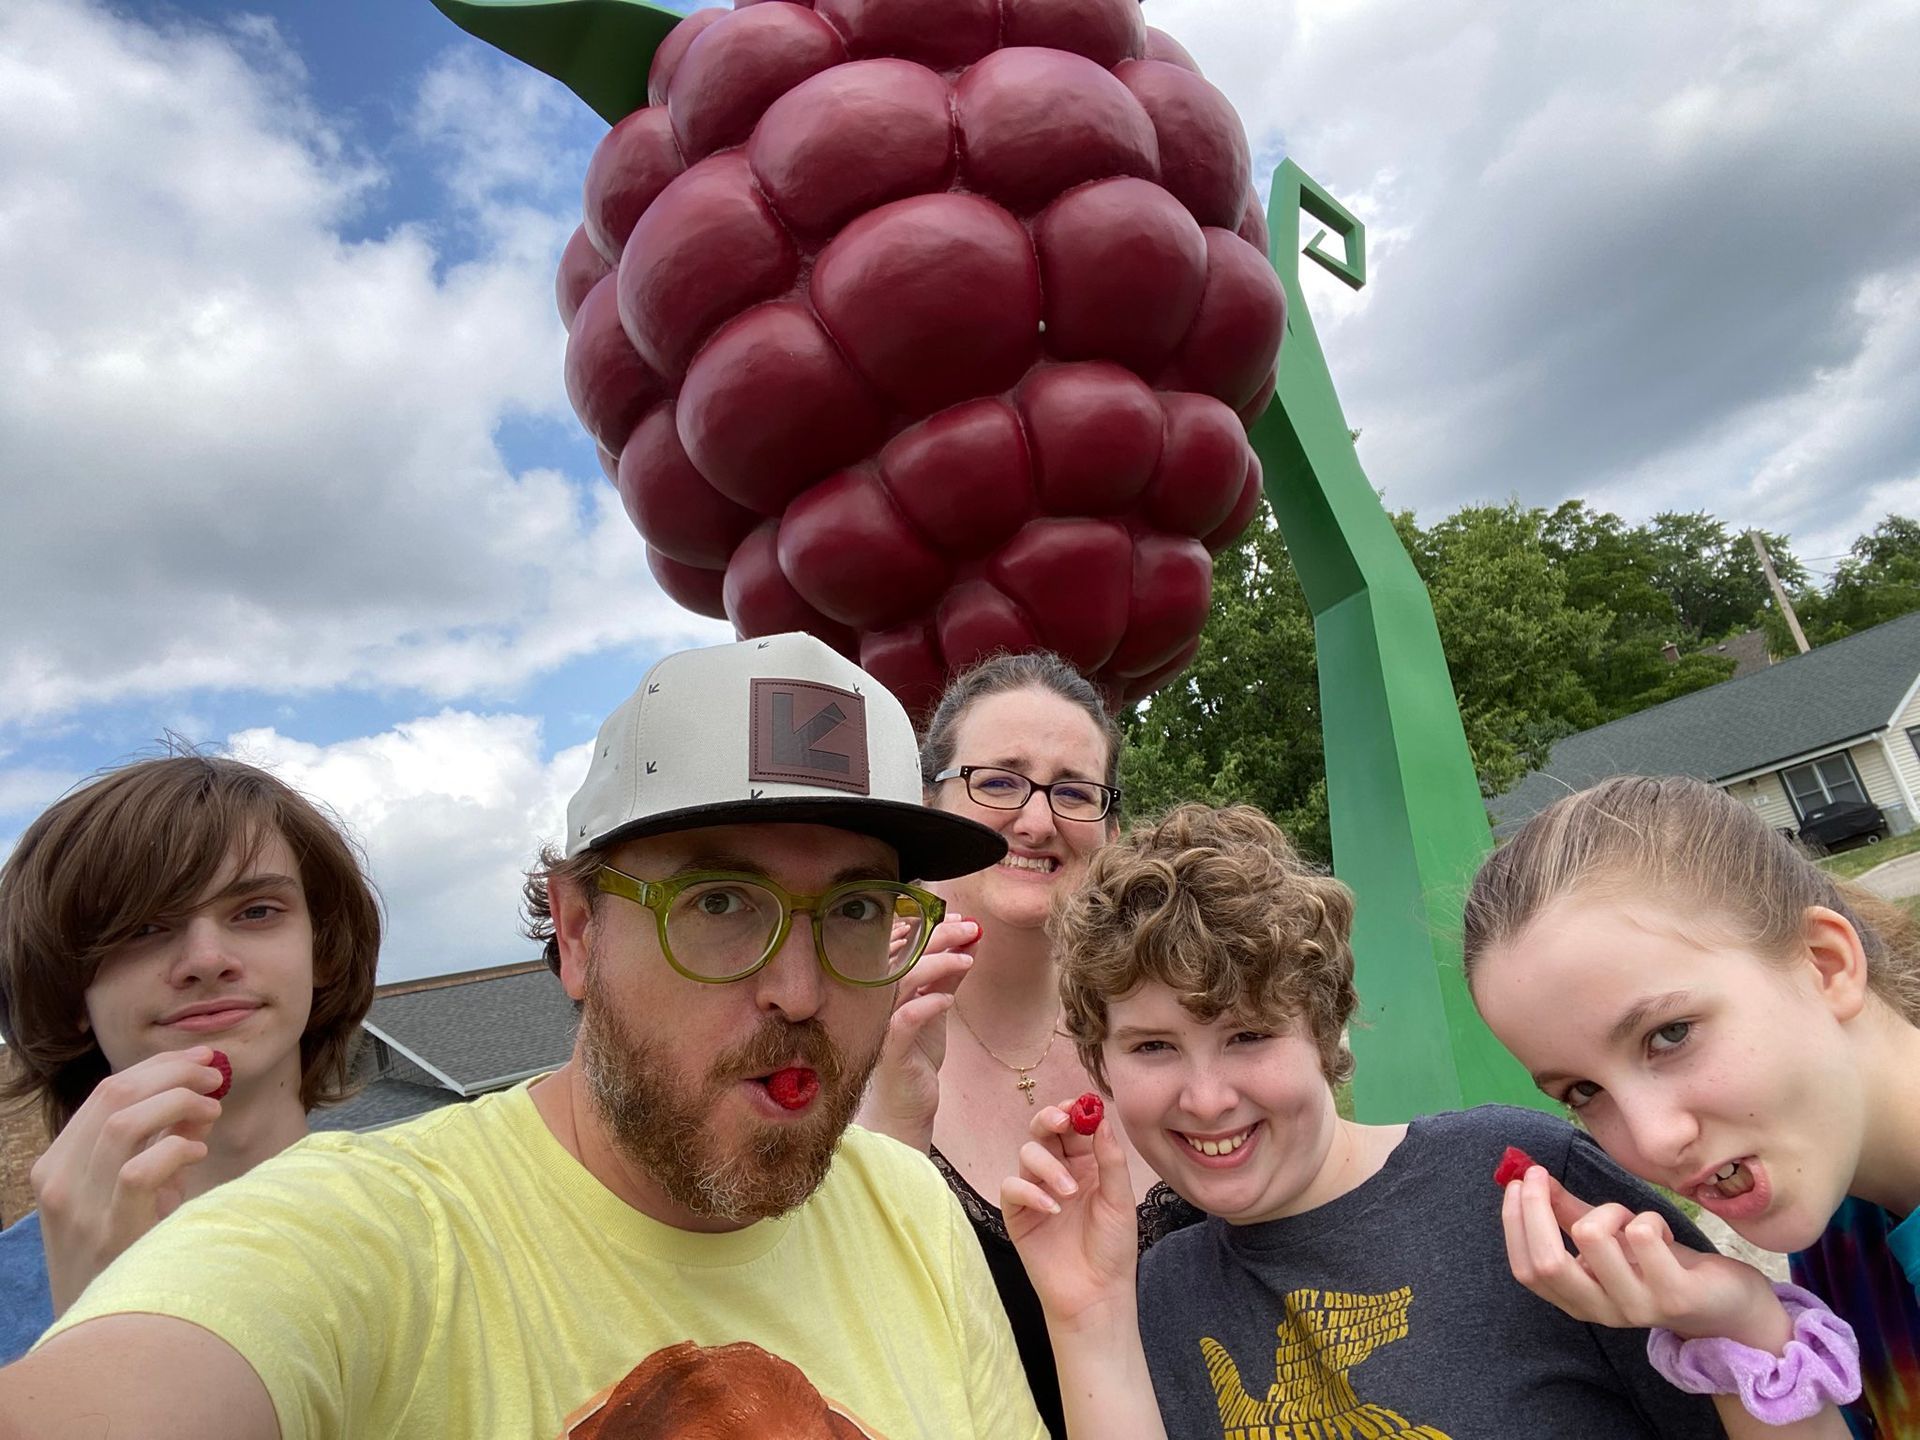 
World's Largest Raspberry Sculpture, world record in Hopkins, Minnesota